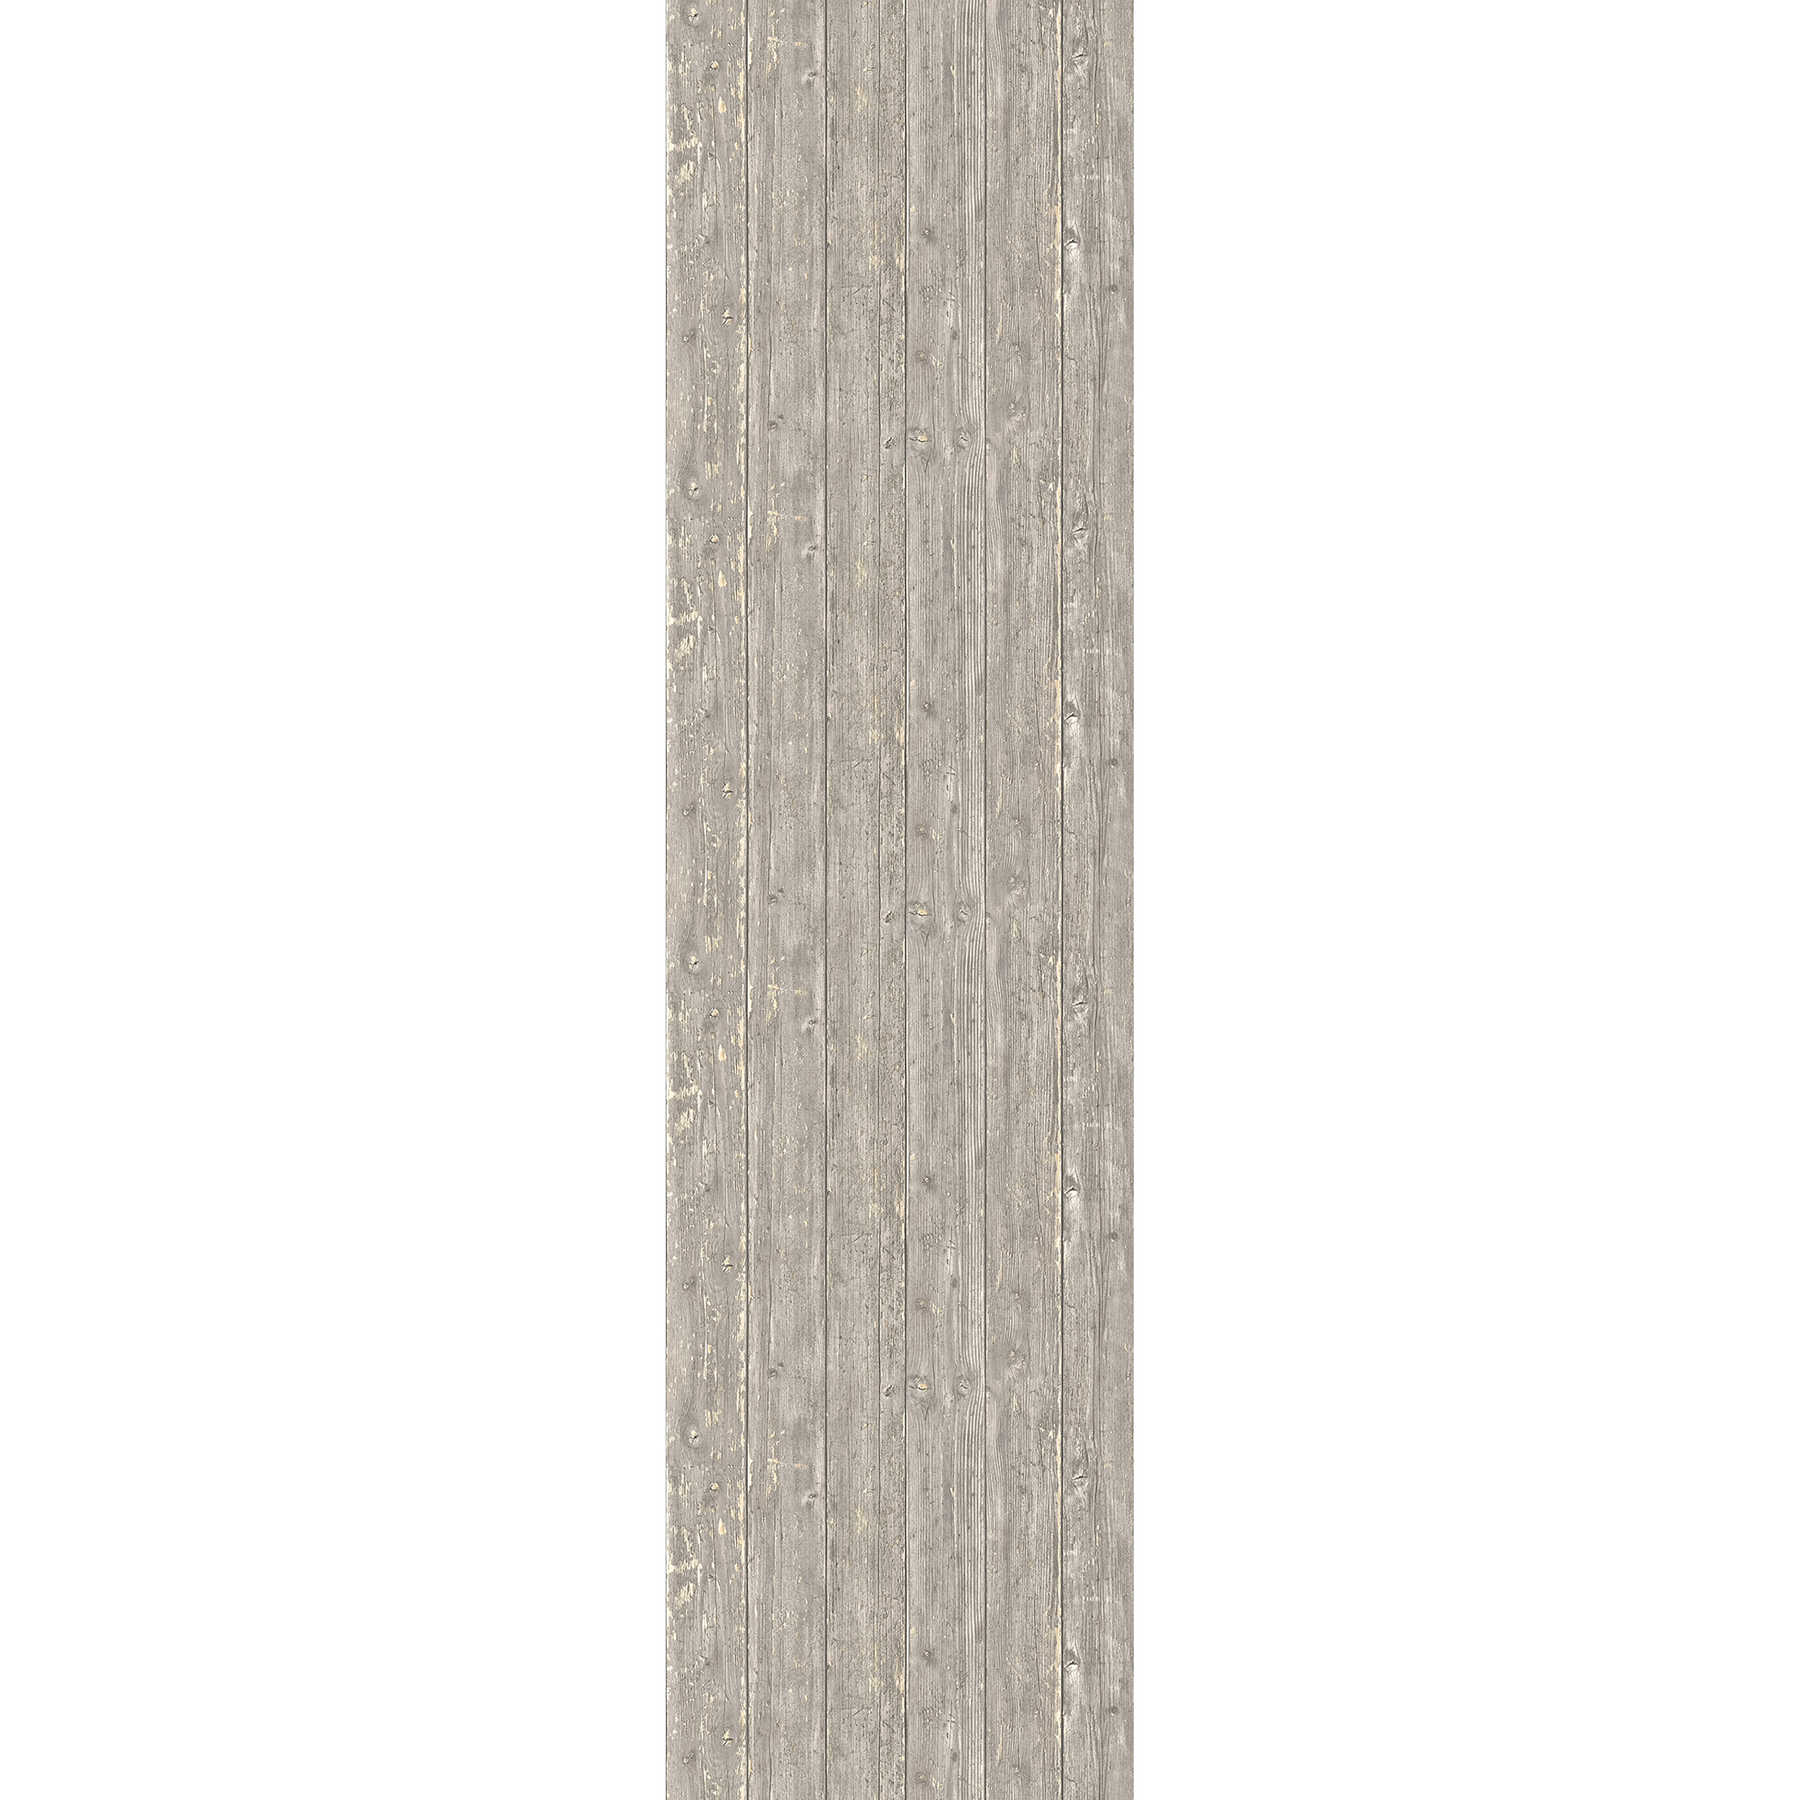 papel pintado con aspecto de madera desgastada - crema, gris
